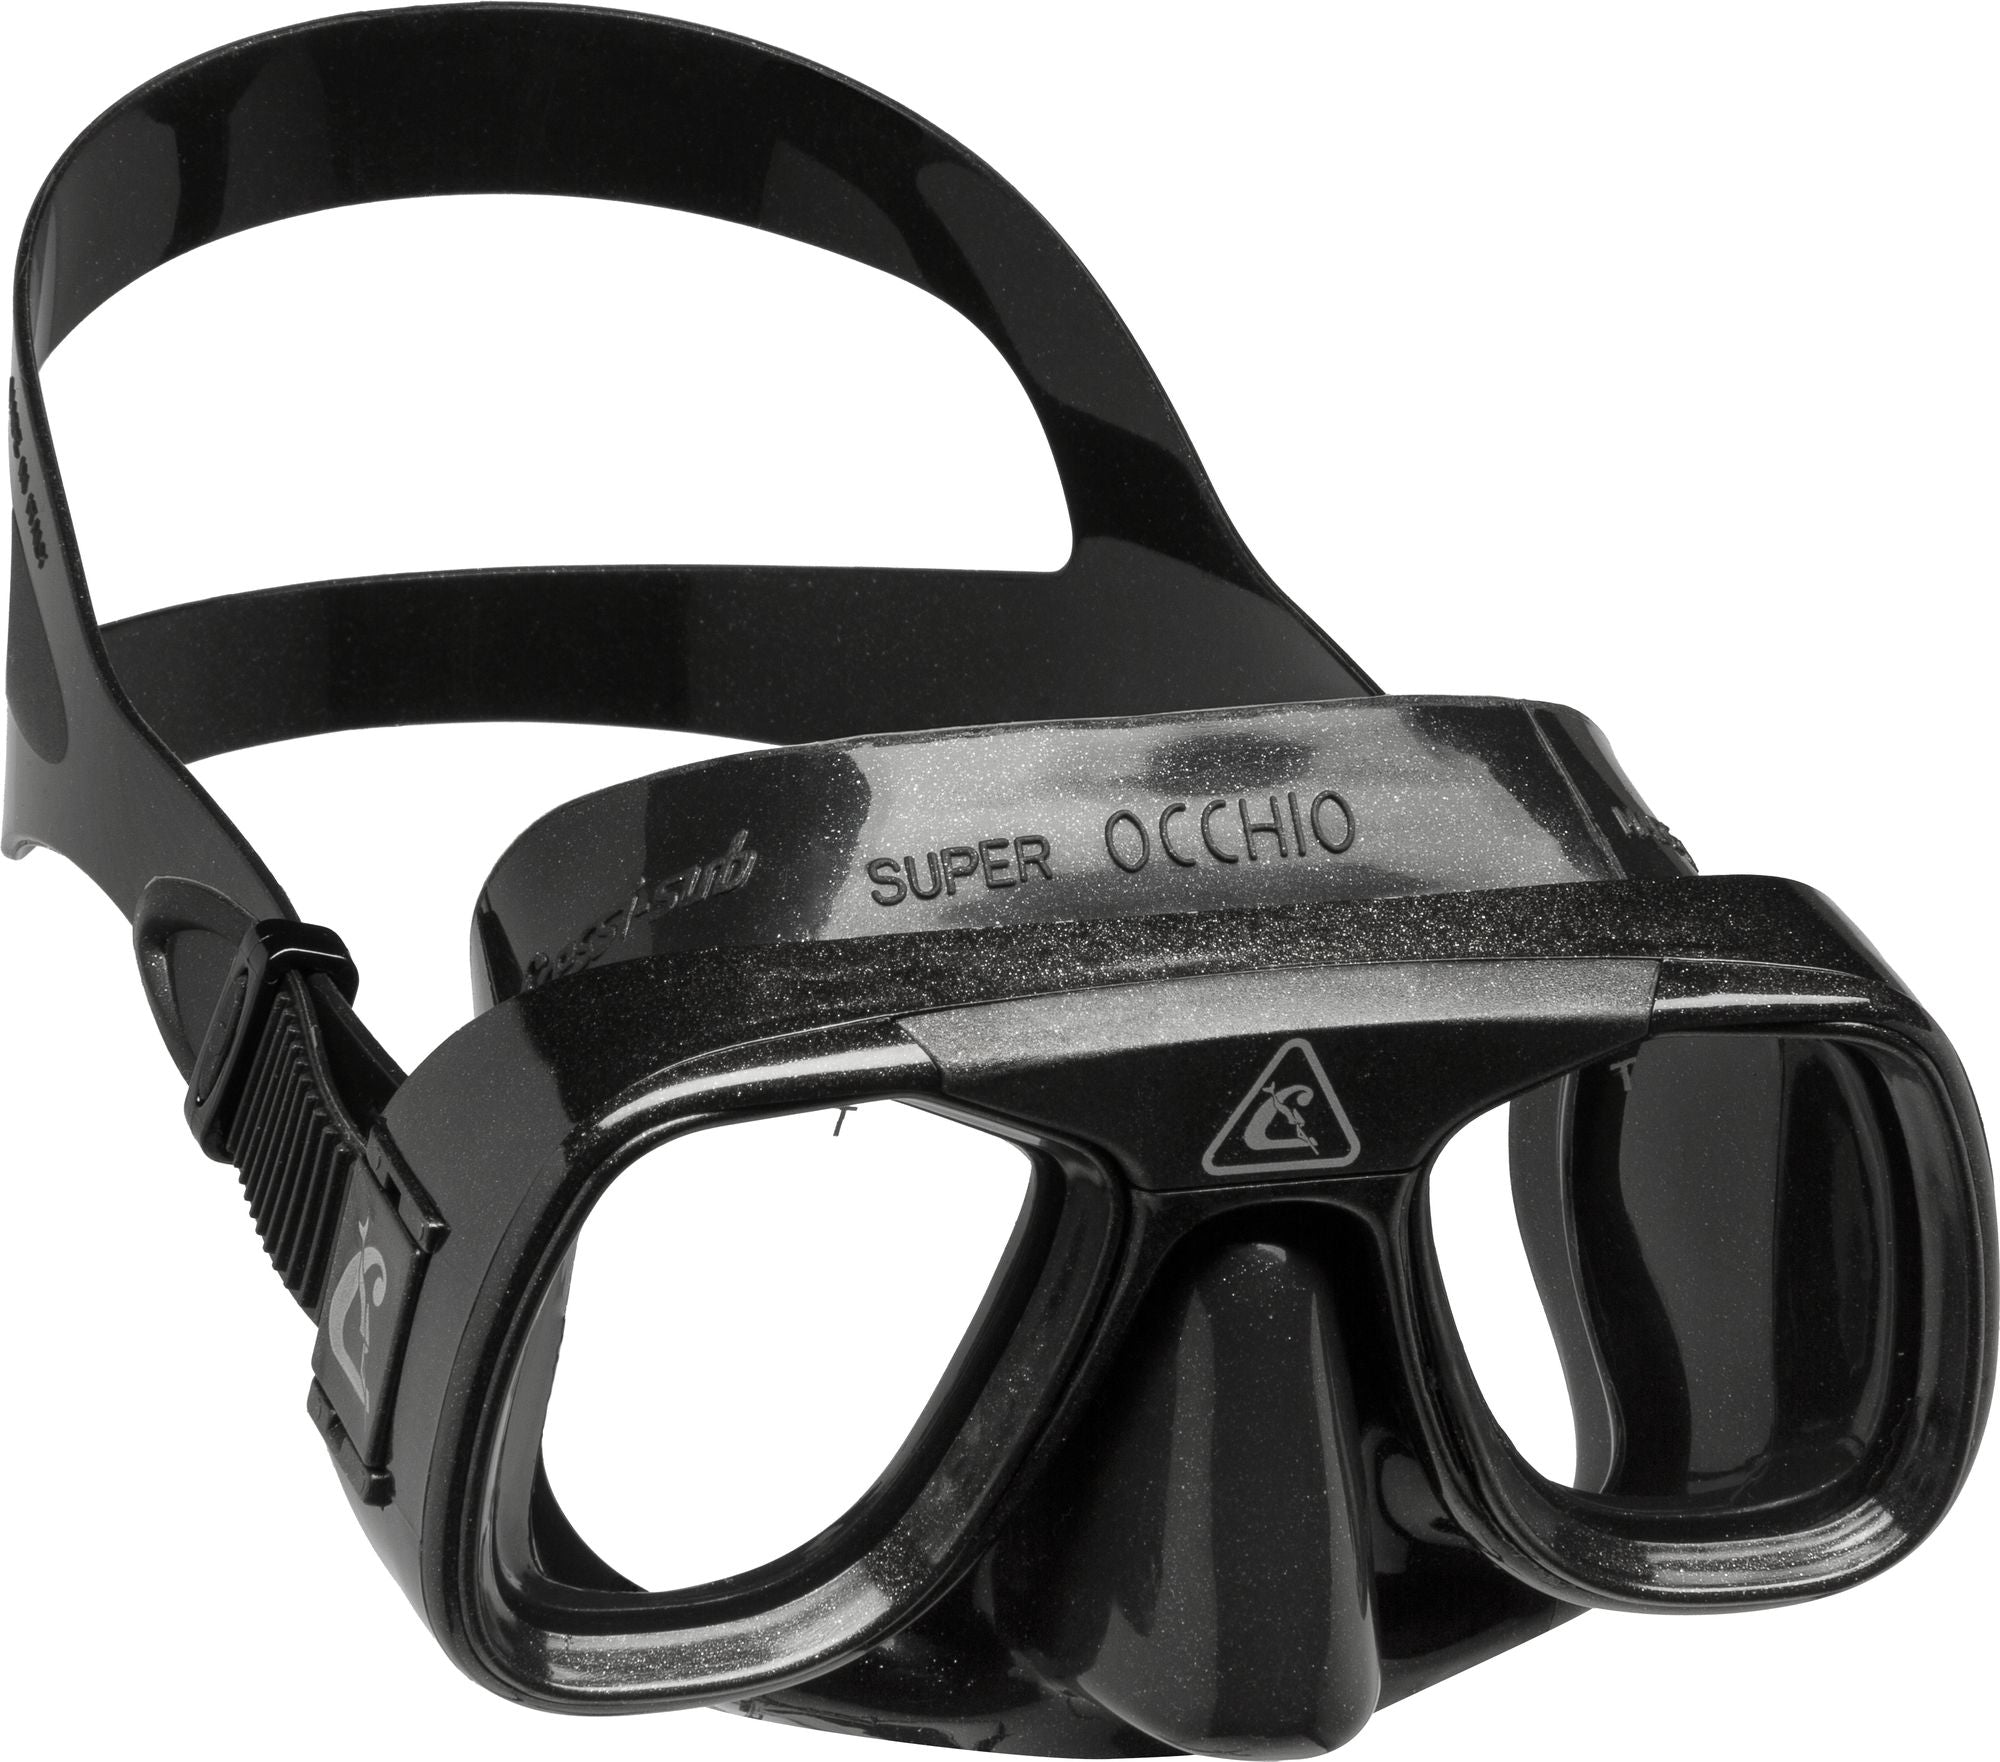 Superocchio Mask - Scuba mask, Snorkelling mask